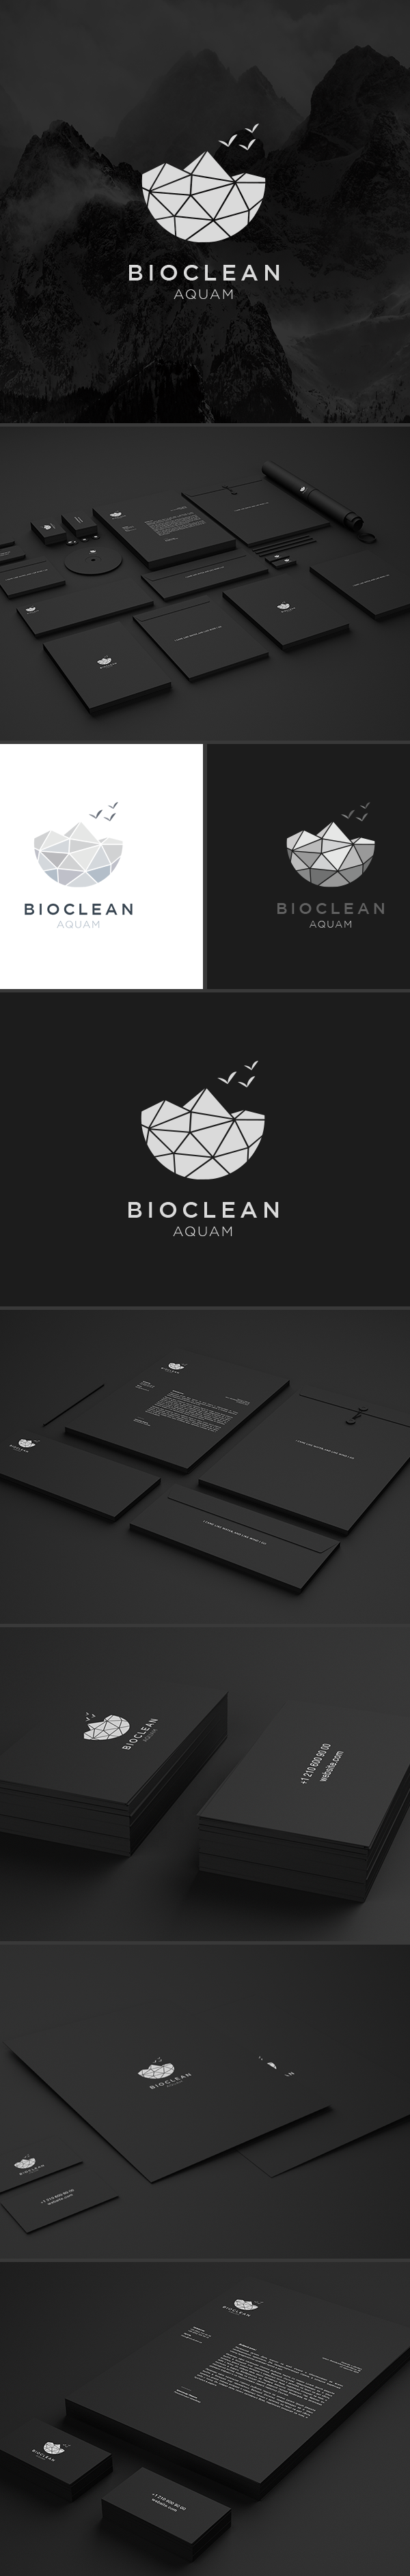 sndsgn BIOCLEAN logo Logotype design identity agency bureau creative water mountains clean simple Smart brand